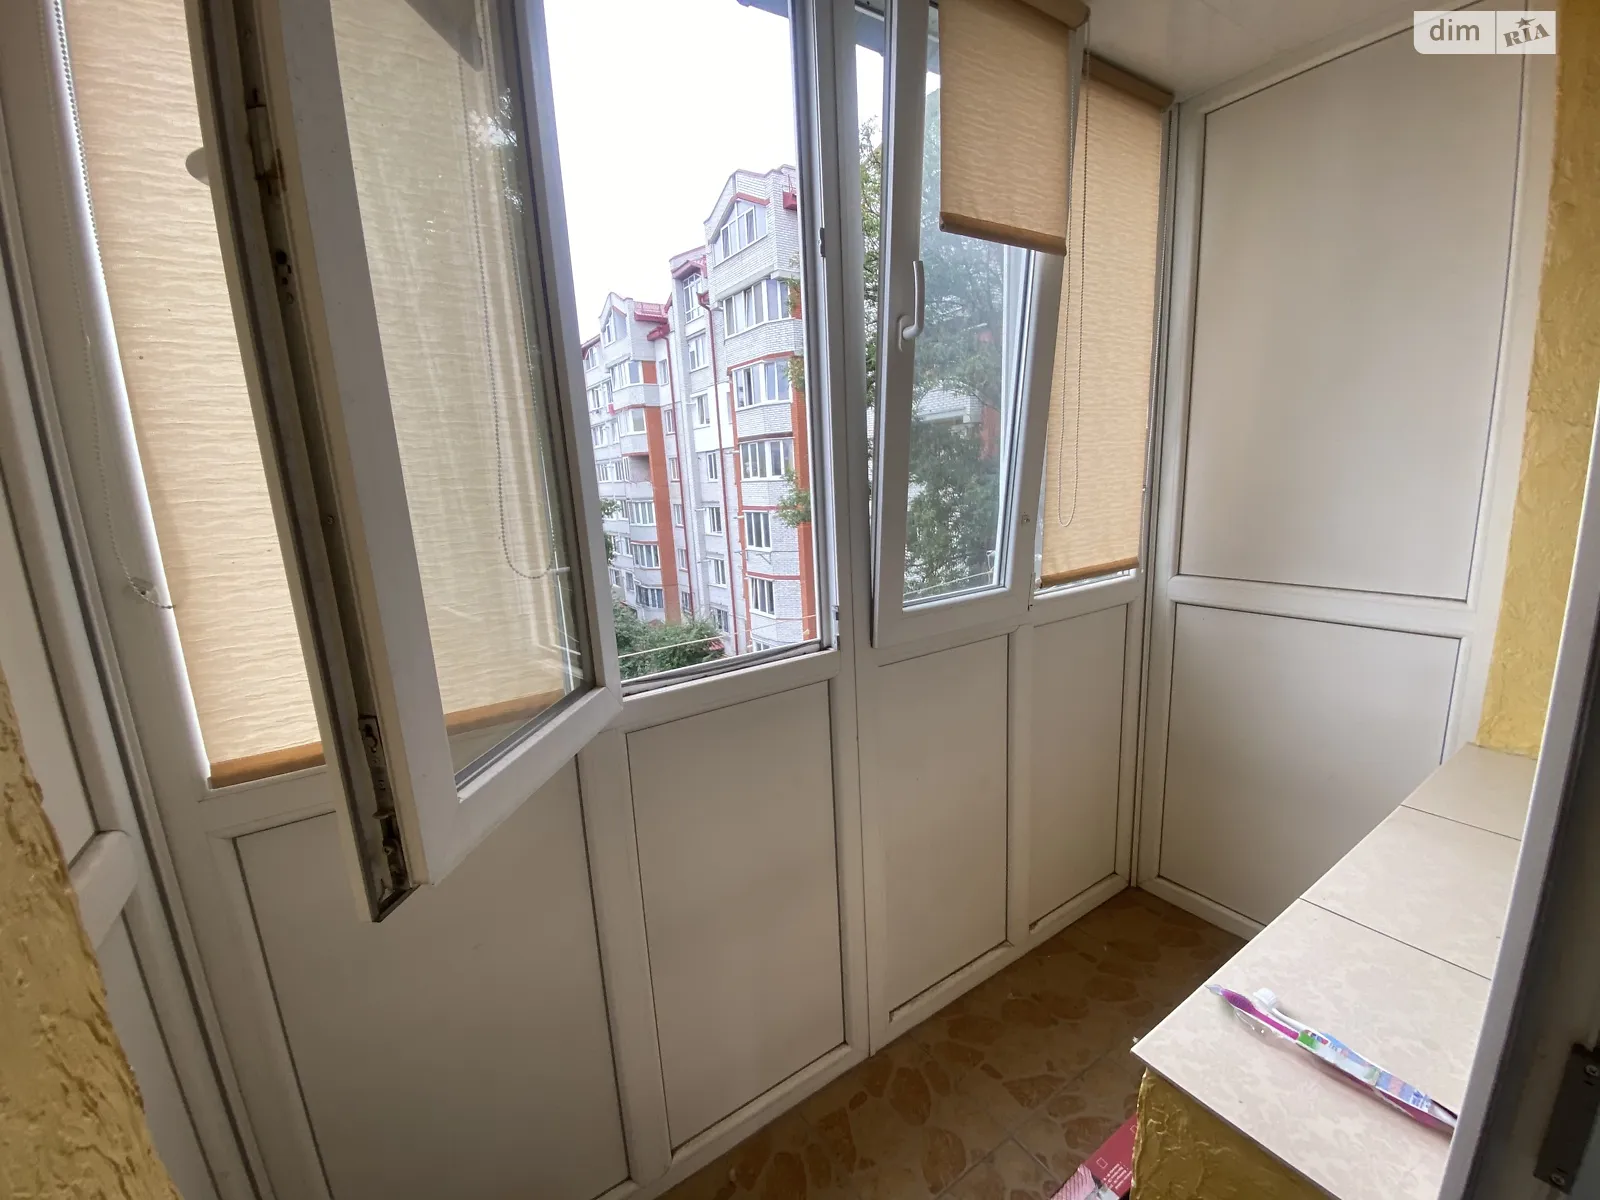 Сдается в аренду комната 18 кв. м в Тернополе - фото 3